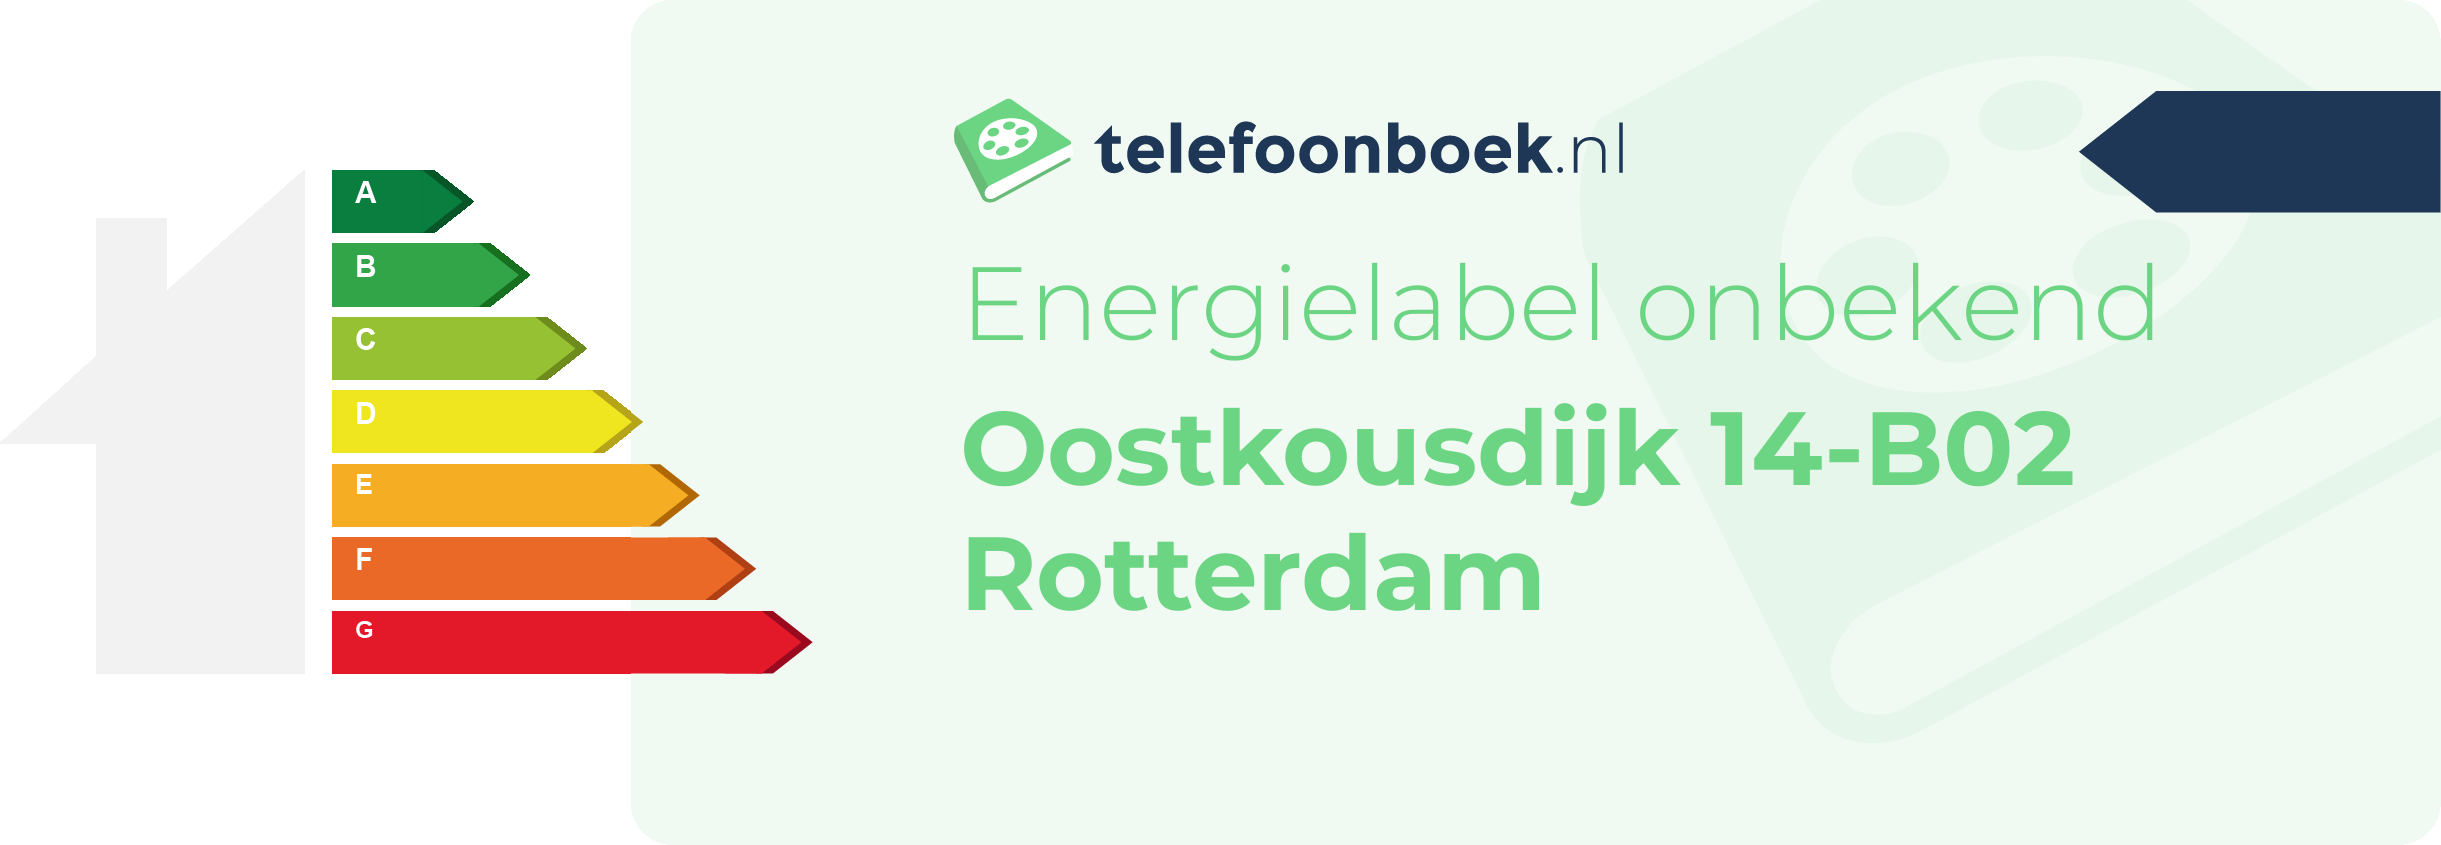 Energielabel Oostkousdijk 14-B02 Rotterdam